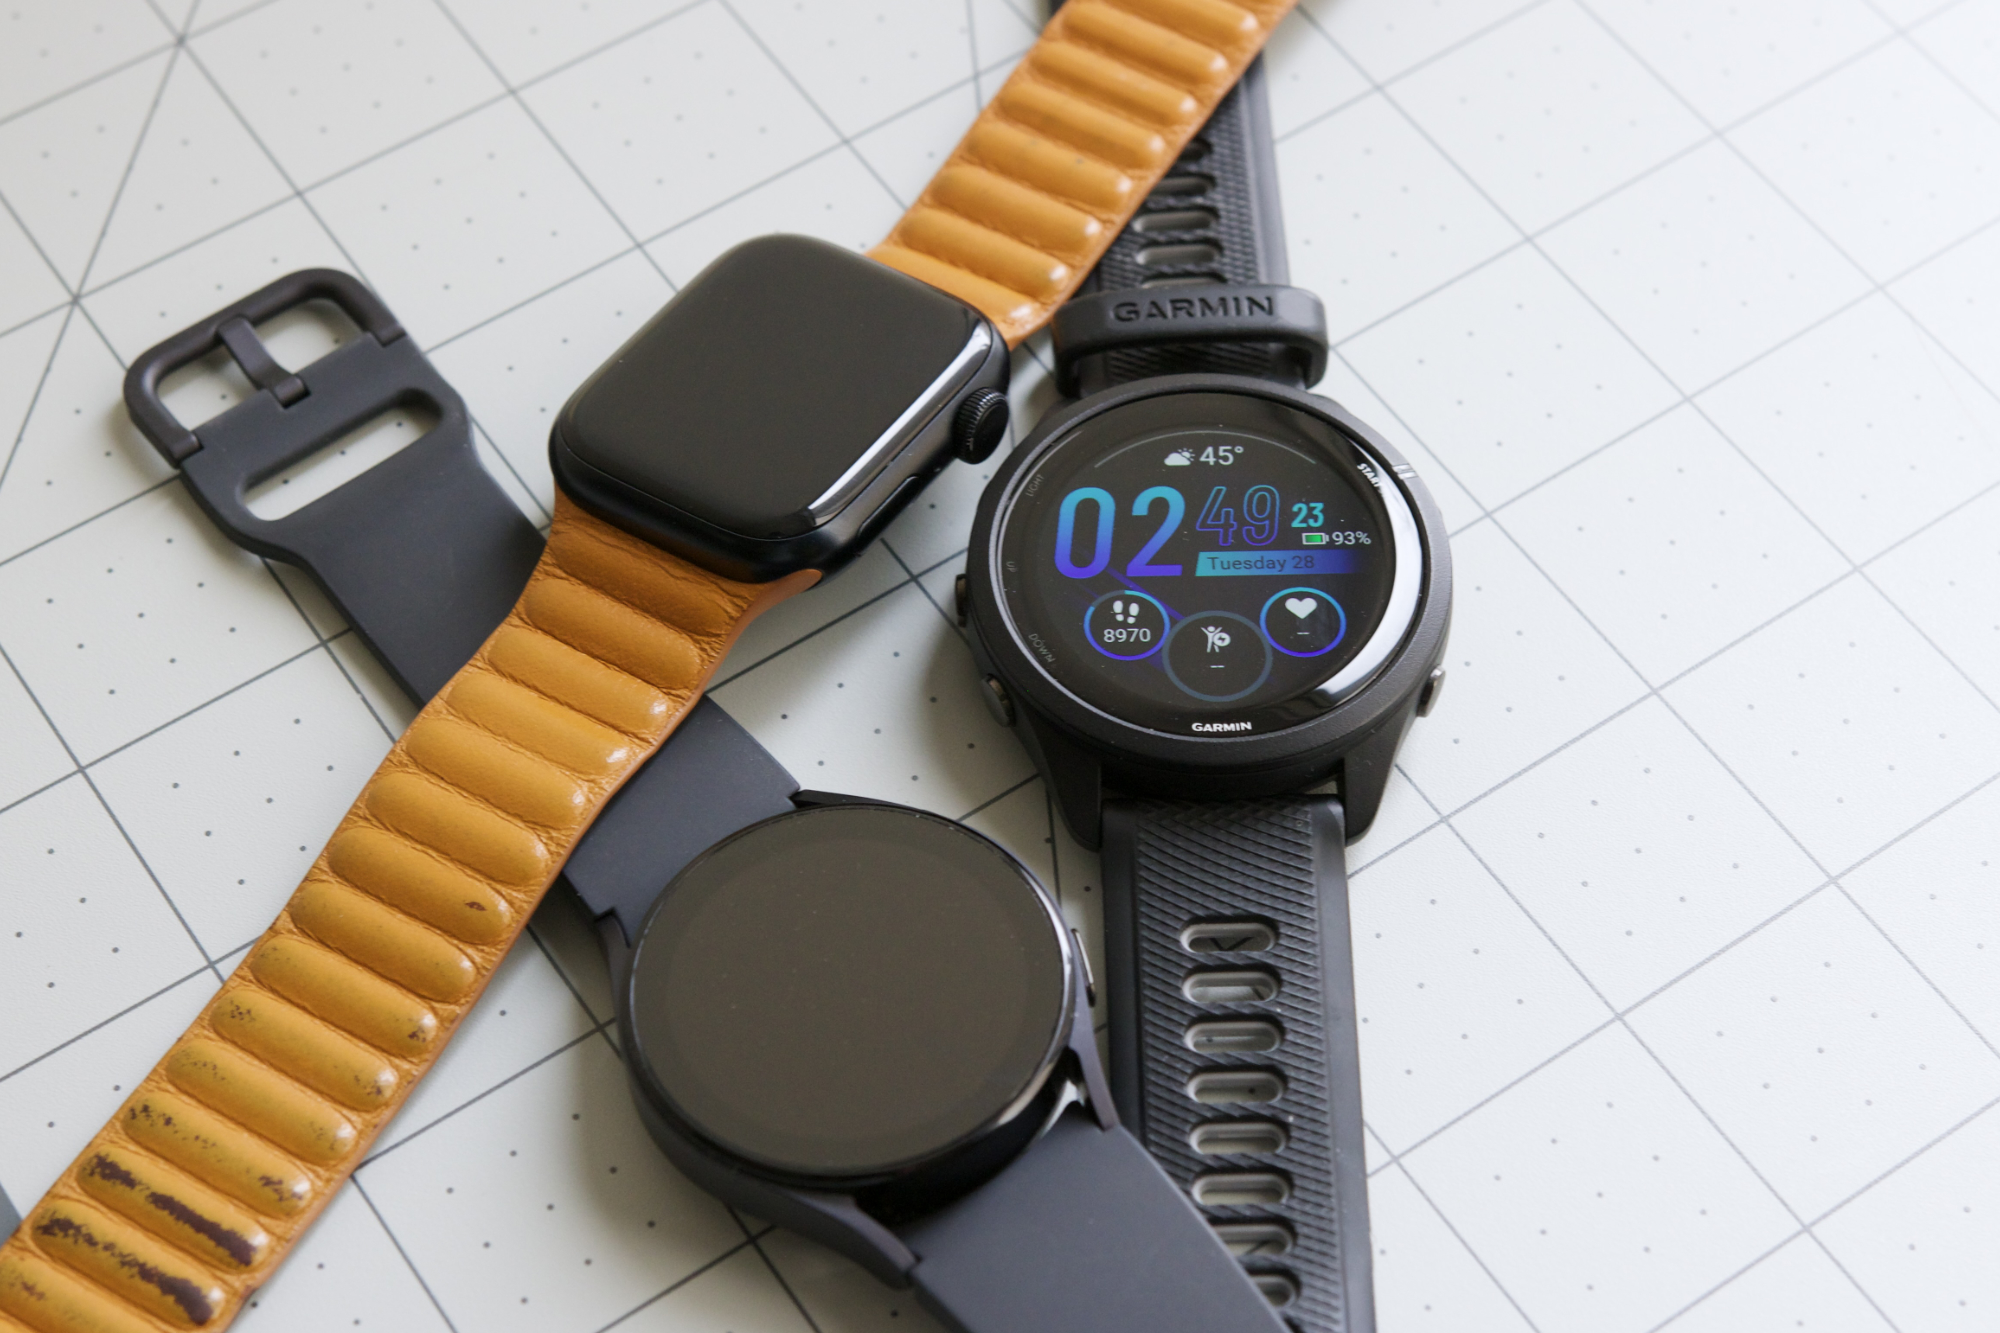 Samsung Galaxy Watch 4 Classic leak suggests a more familiar design